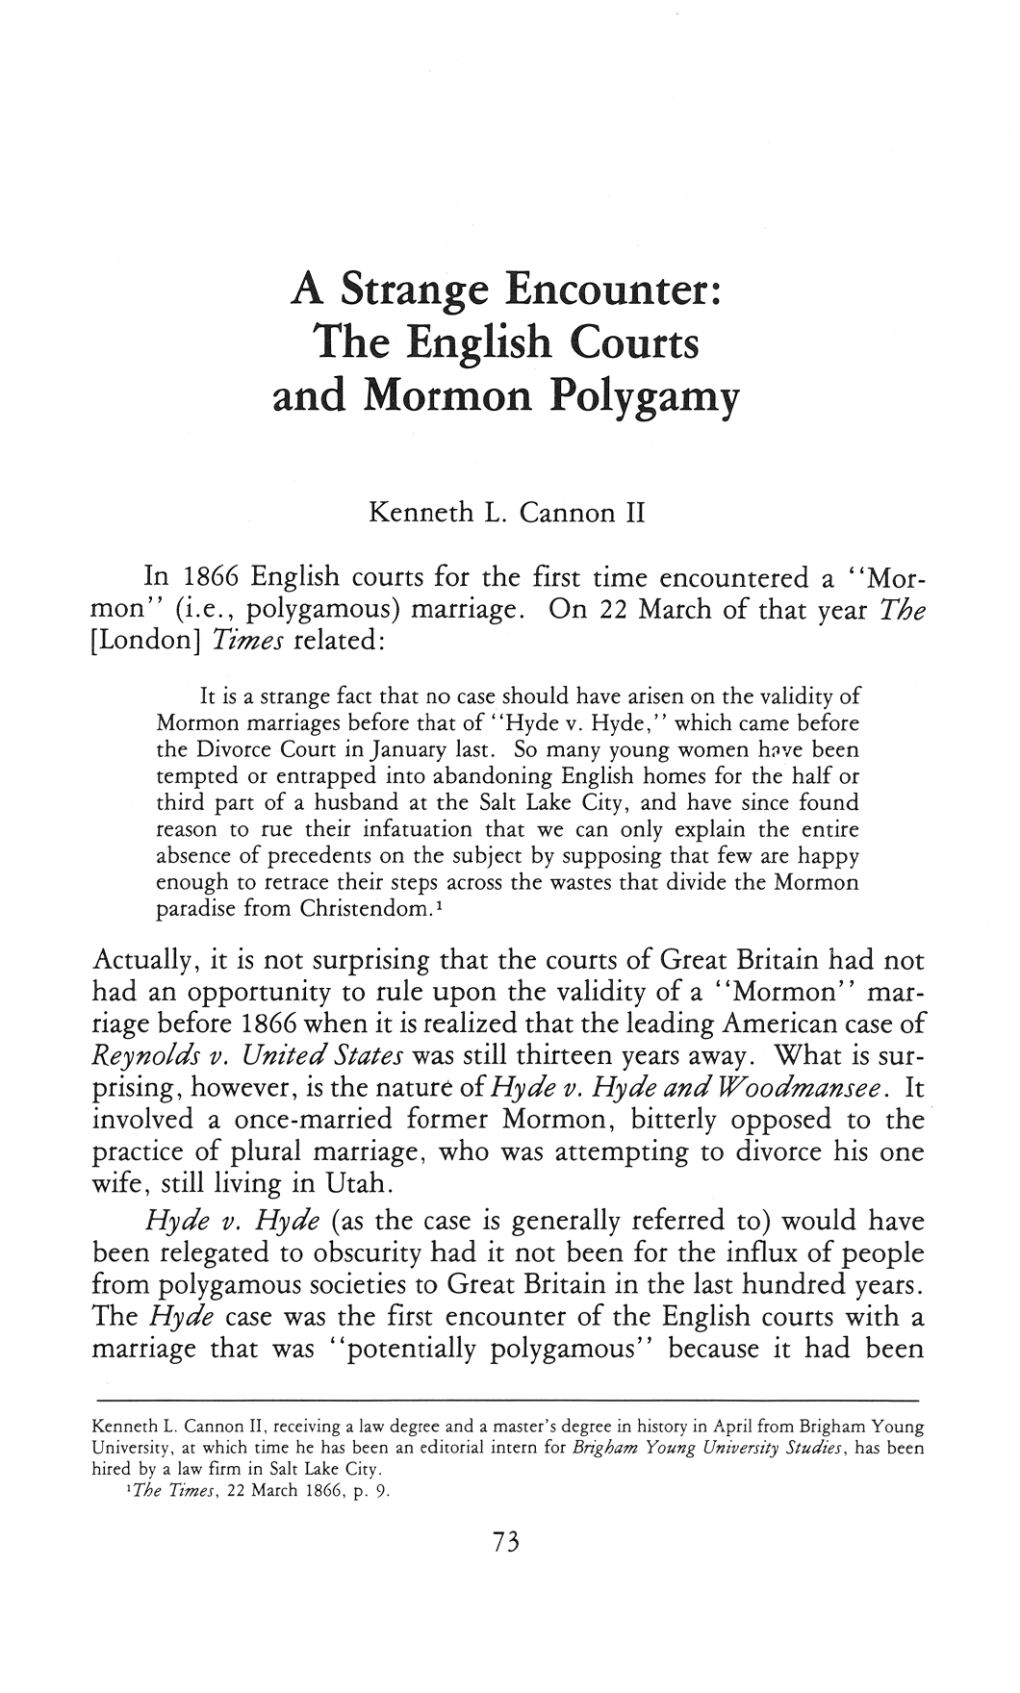 A Strange Encounter the English Courts and Mormon Polygamy